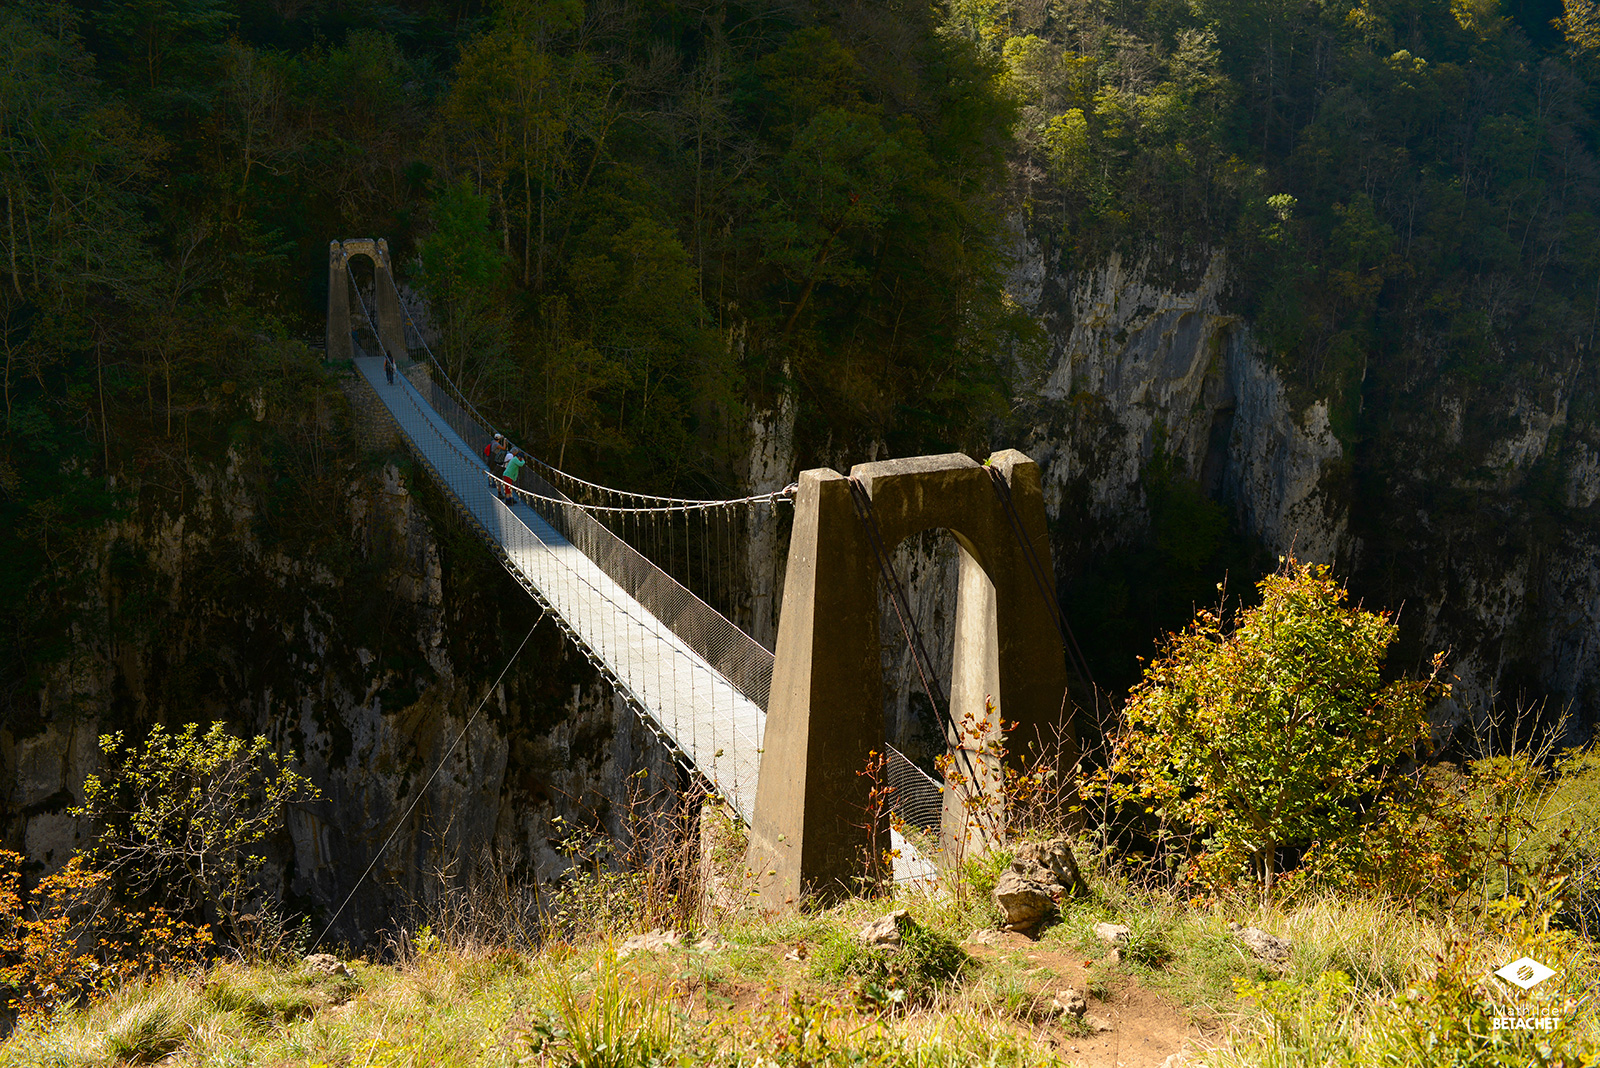 The Holzarte suspension bridge